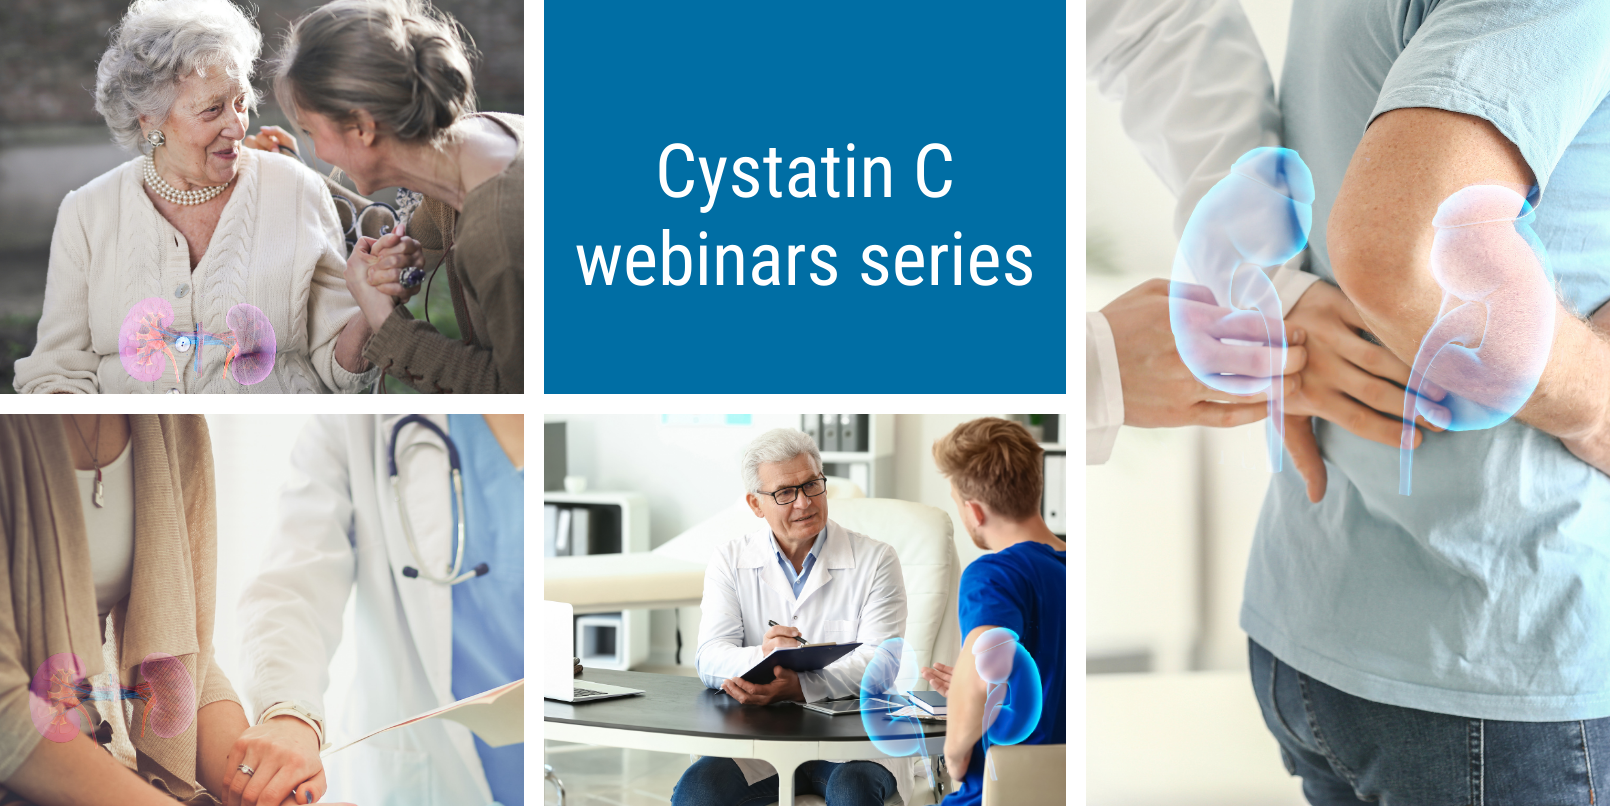 Cystatin C webinar series